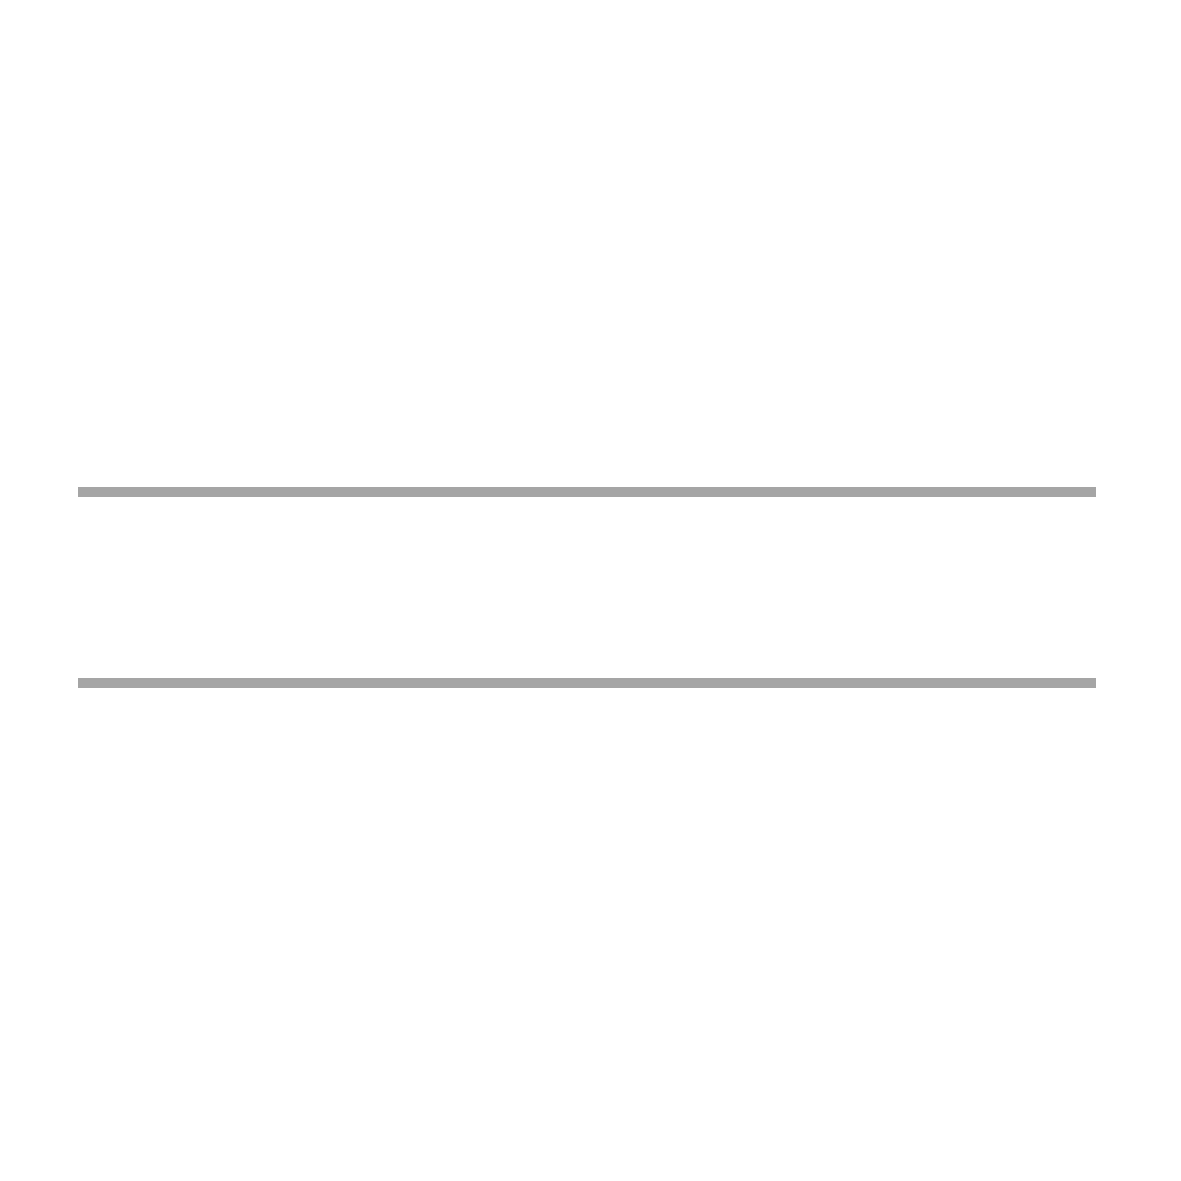 Edinburgh Bathroom installers ltd